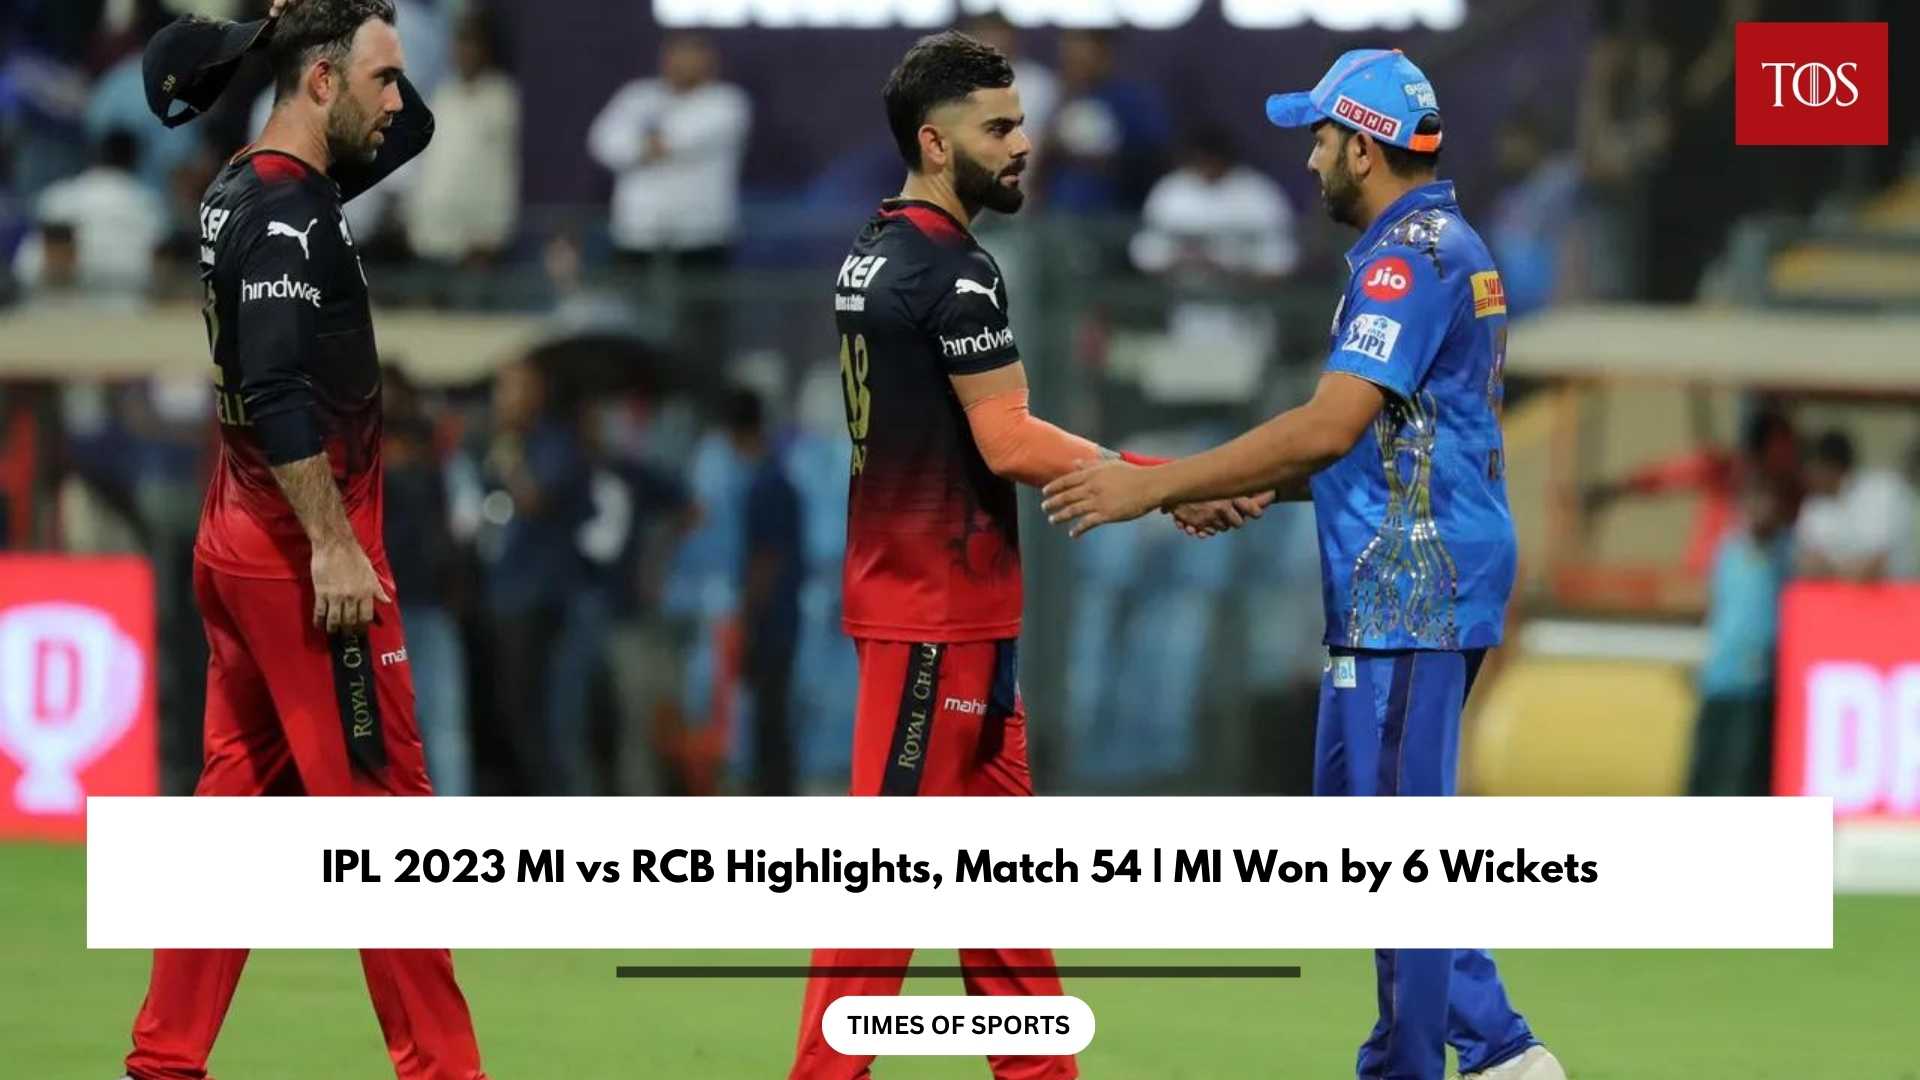 IPL 2023 MI vs RCB Highlights, Match 54 MI Won by 6 Wickets